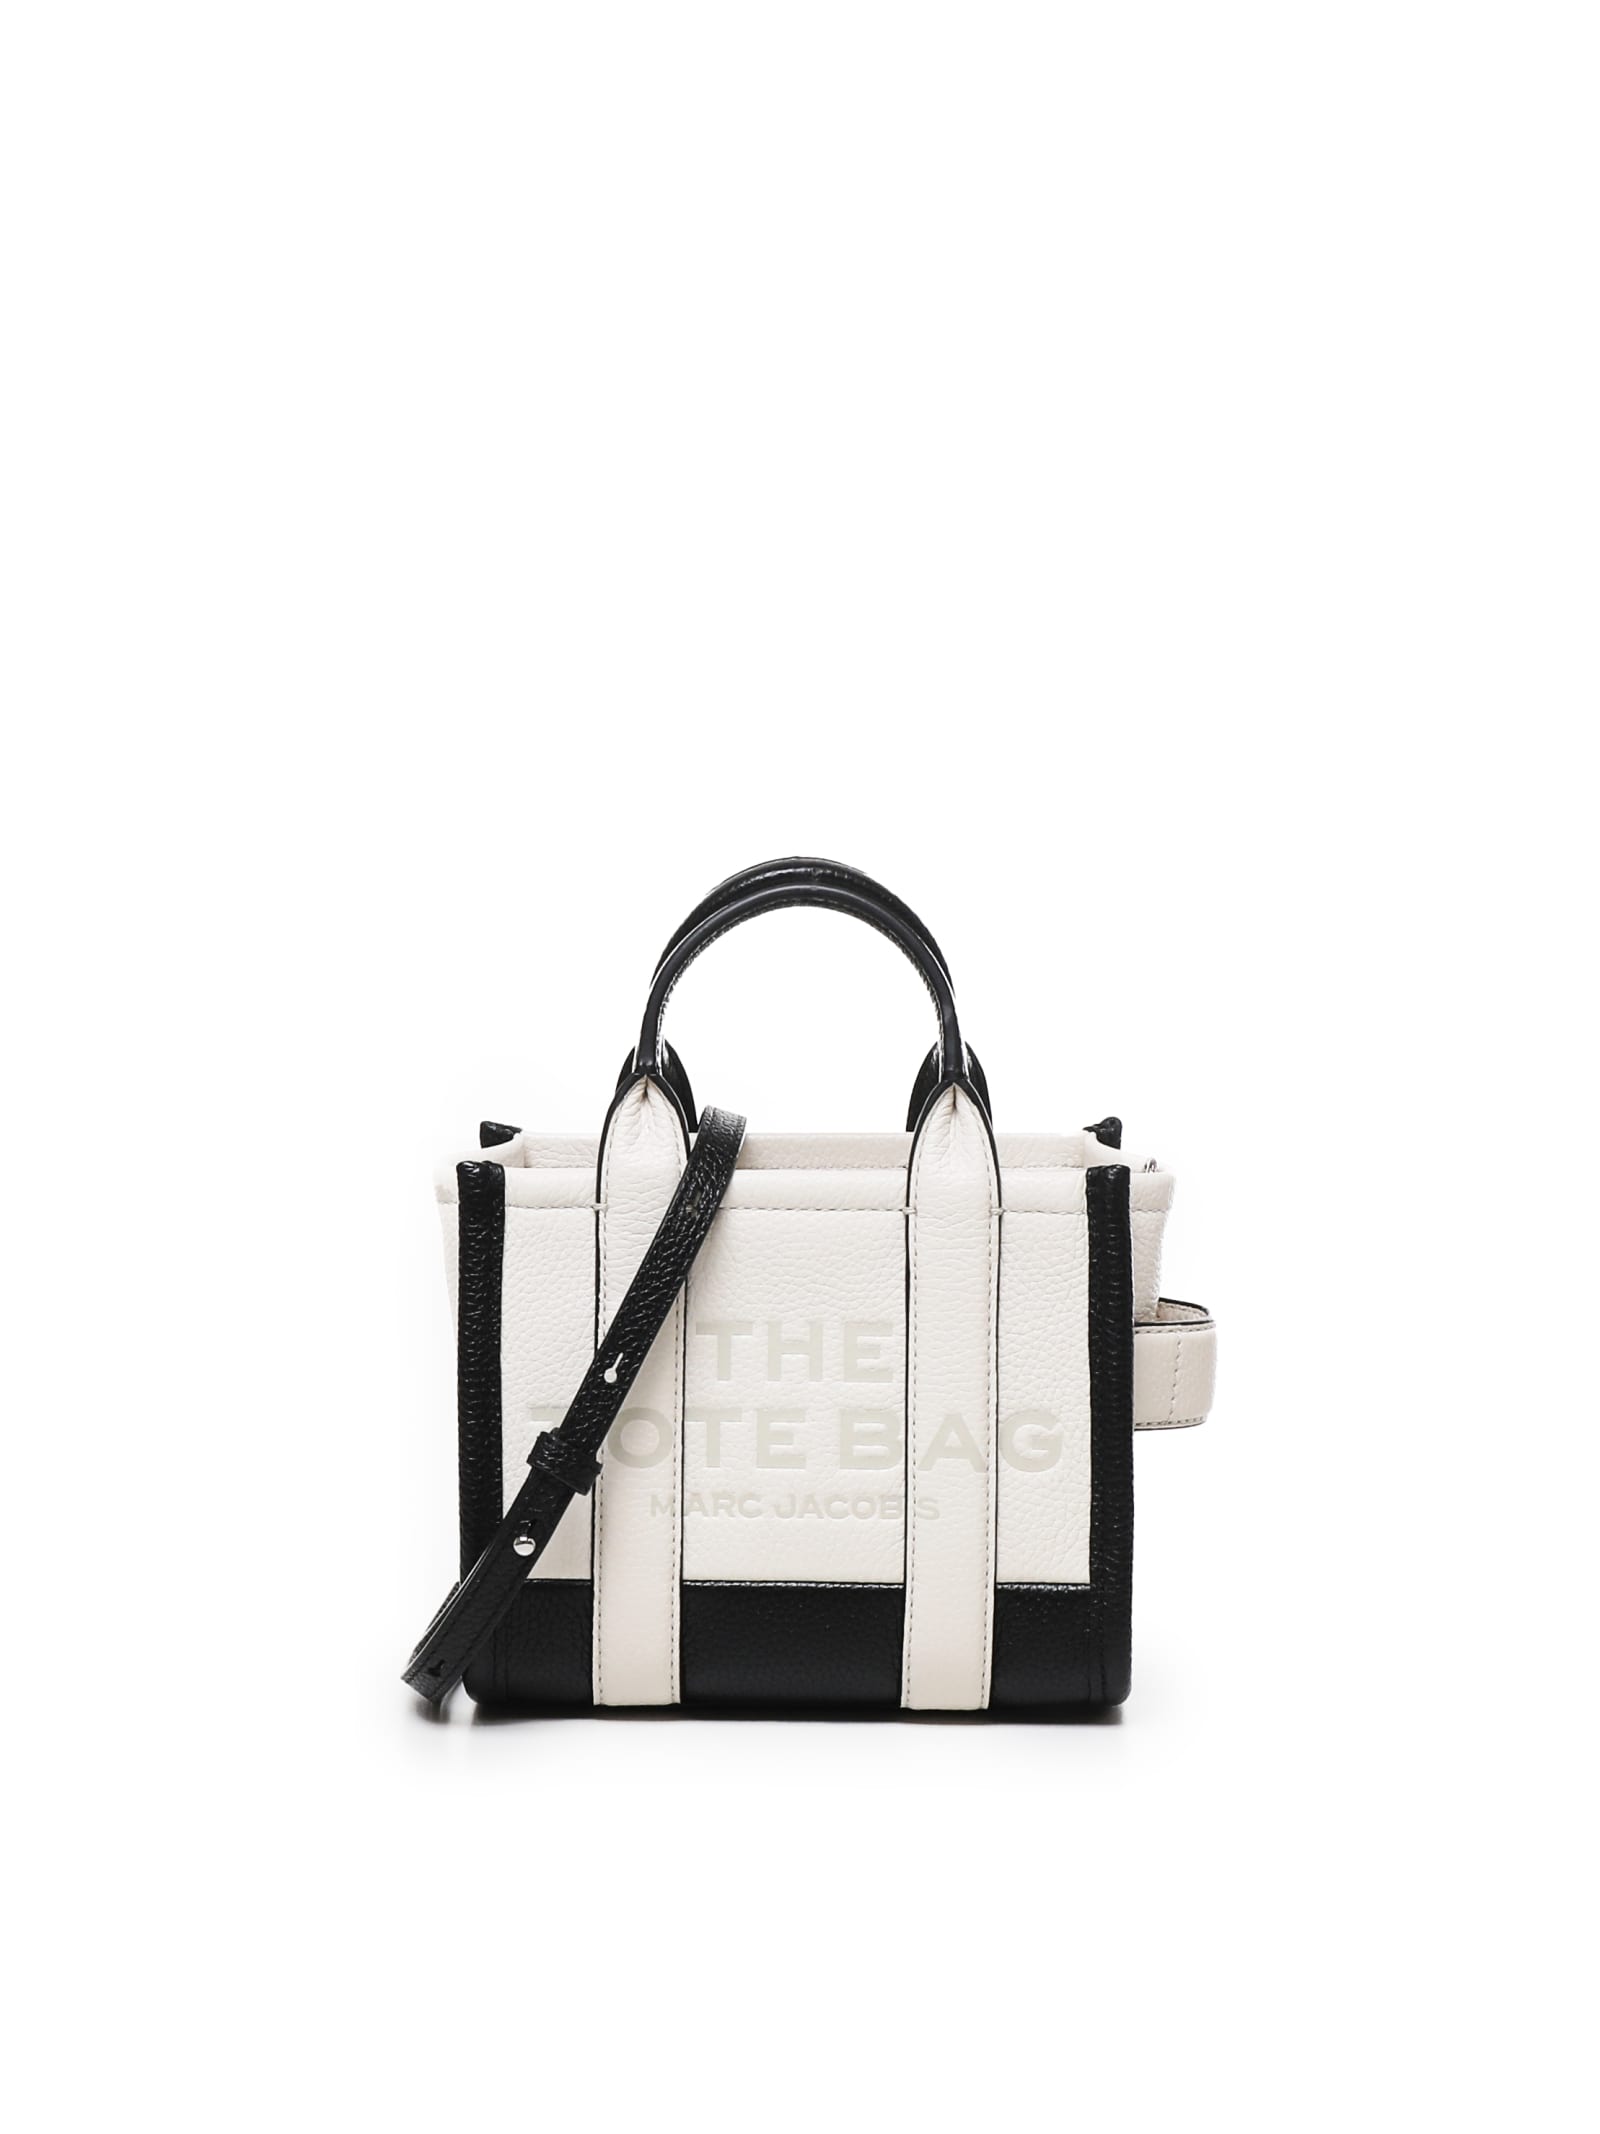 Marc Jacobs The Mini Cb Tote Bag In White, Black